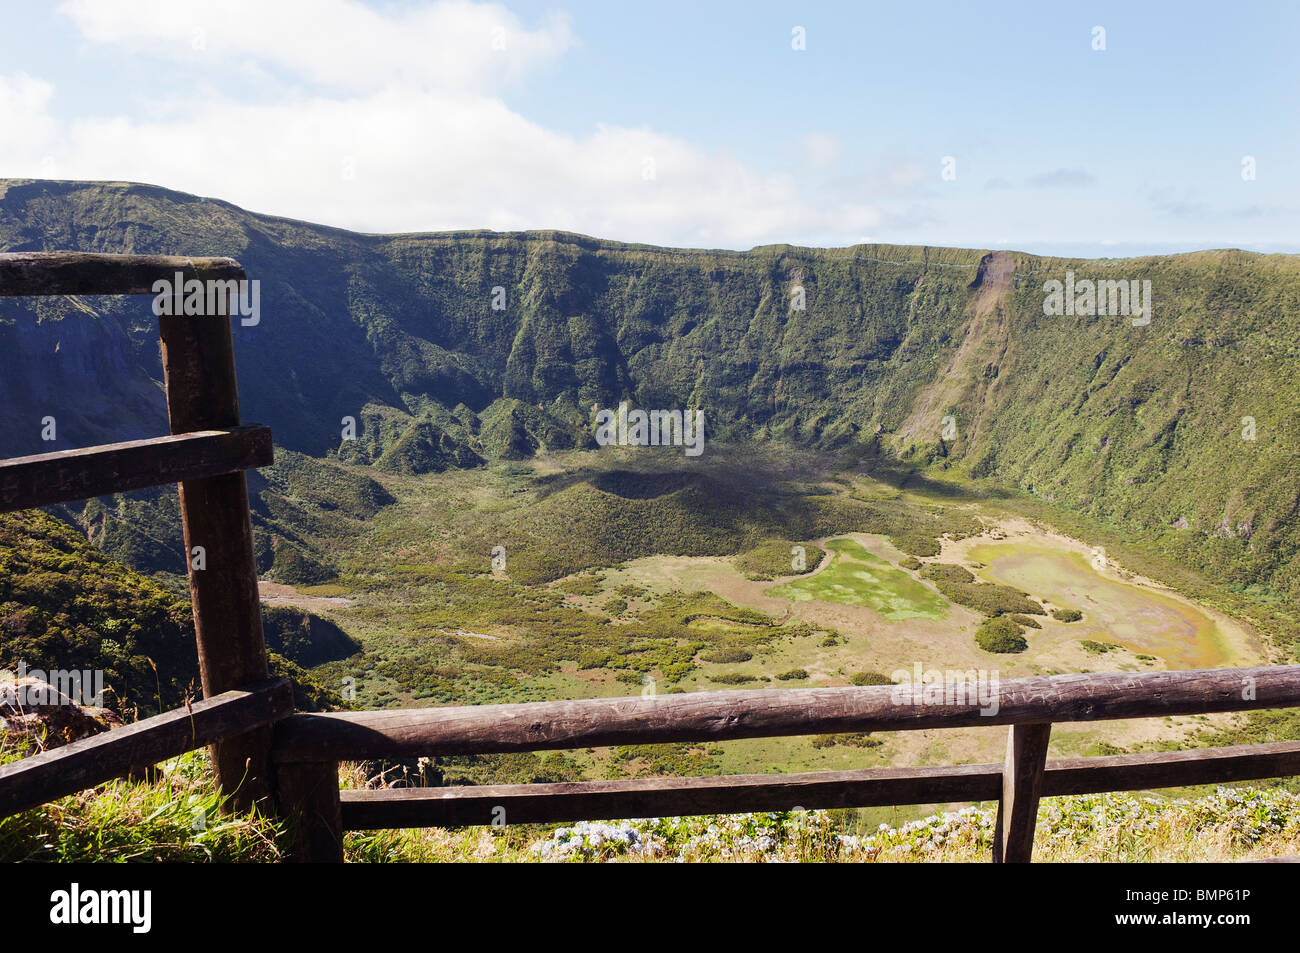 Innerhalb des erloschenen Vulkans Caldeira in Insel Faial, Azoren, Portugal Stockfoto